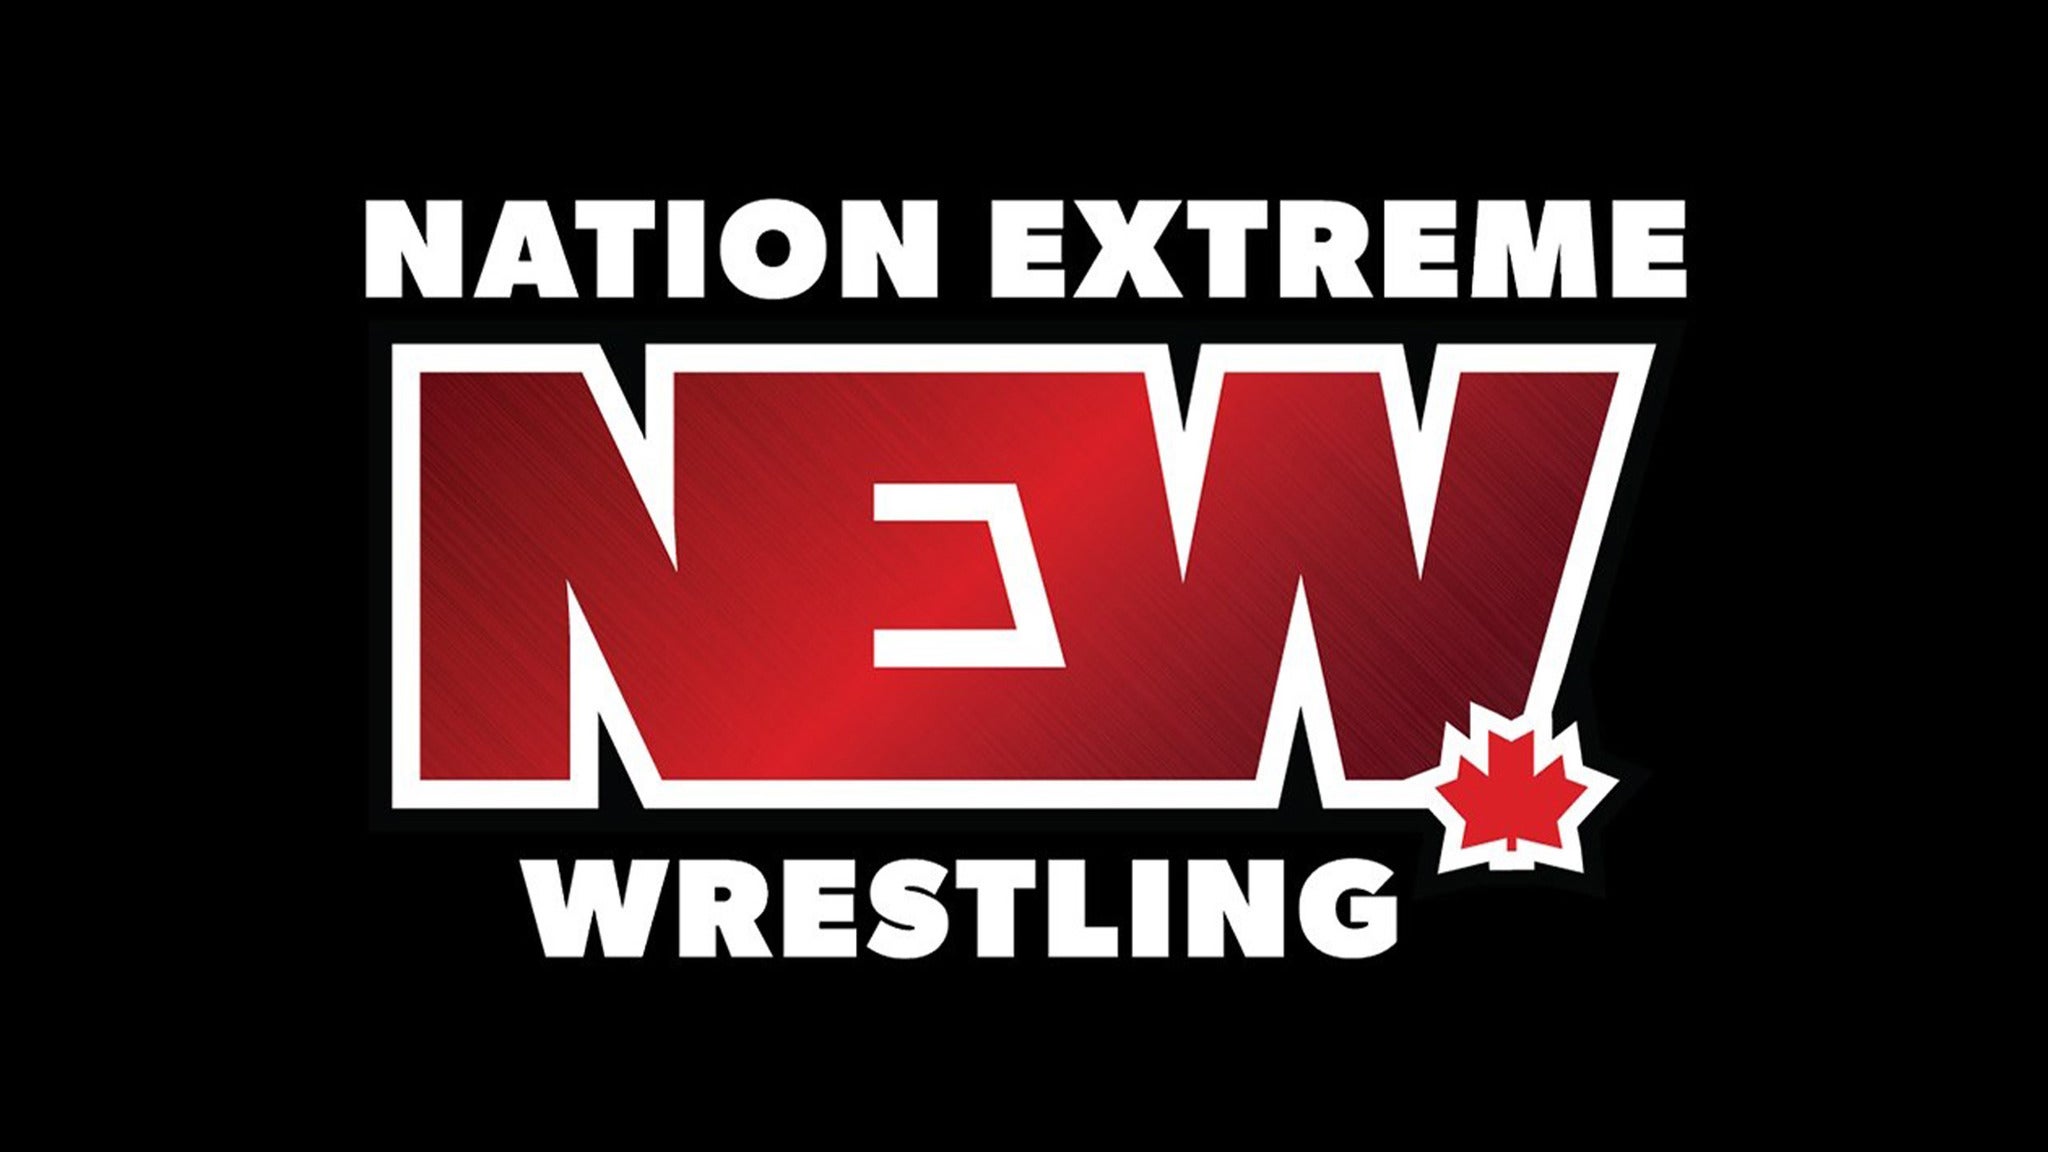 Nation Extreme Wrestling (NEW Wrestling) in Vancouver promo photo for Me + 3 Promotional  presale offer code